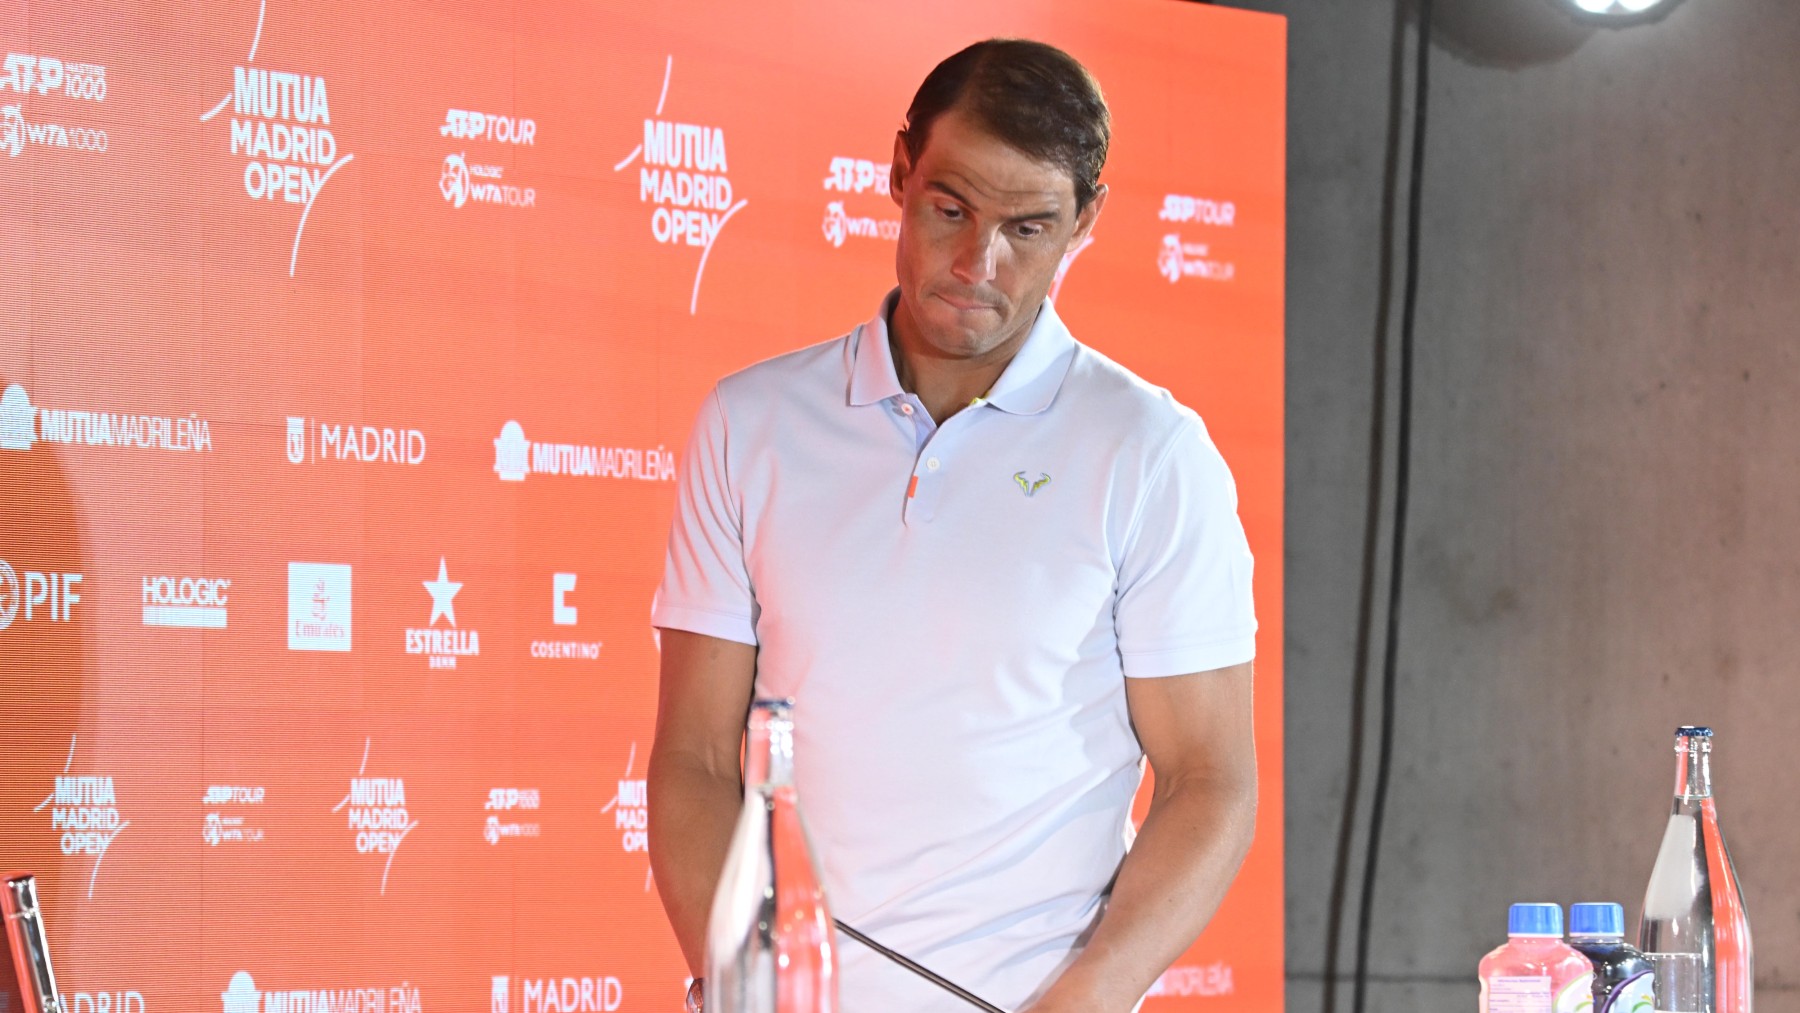 Rafa Nadal, en rueda de prensa en el Mutua Madrid Open. (Europa Press)